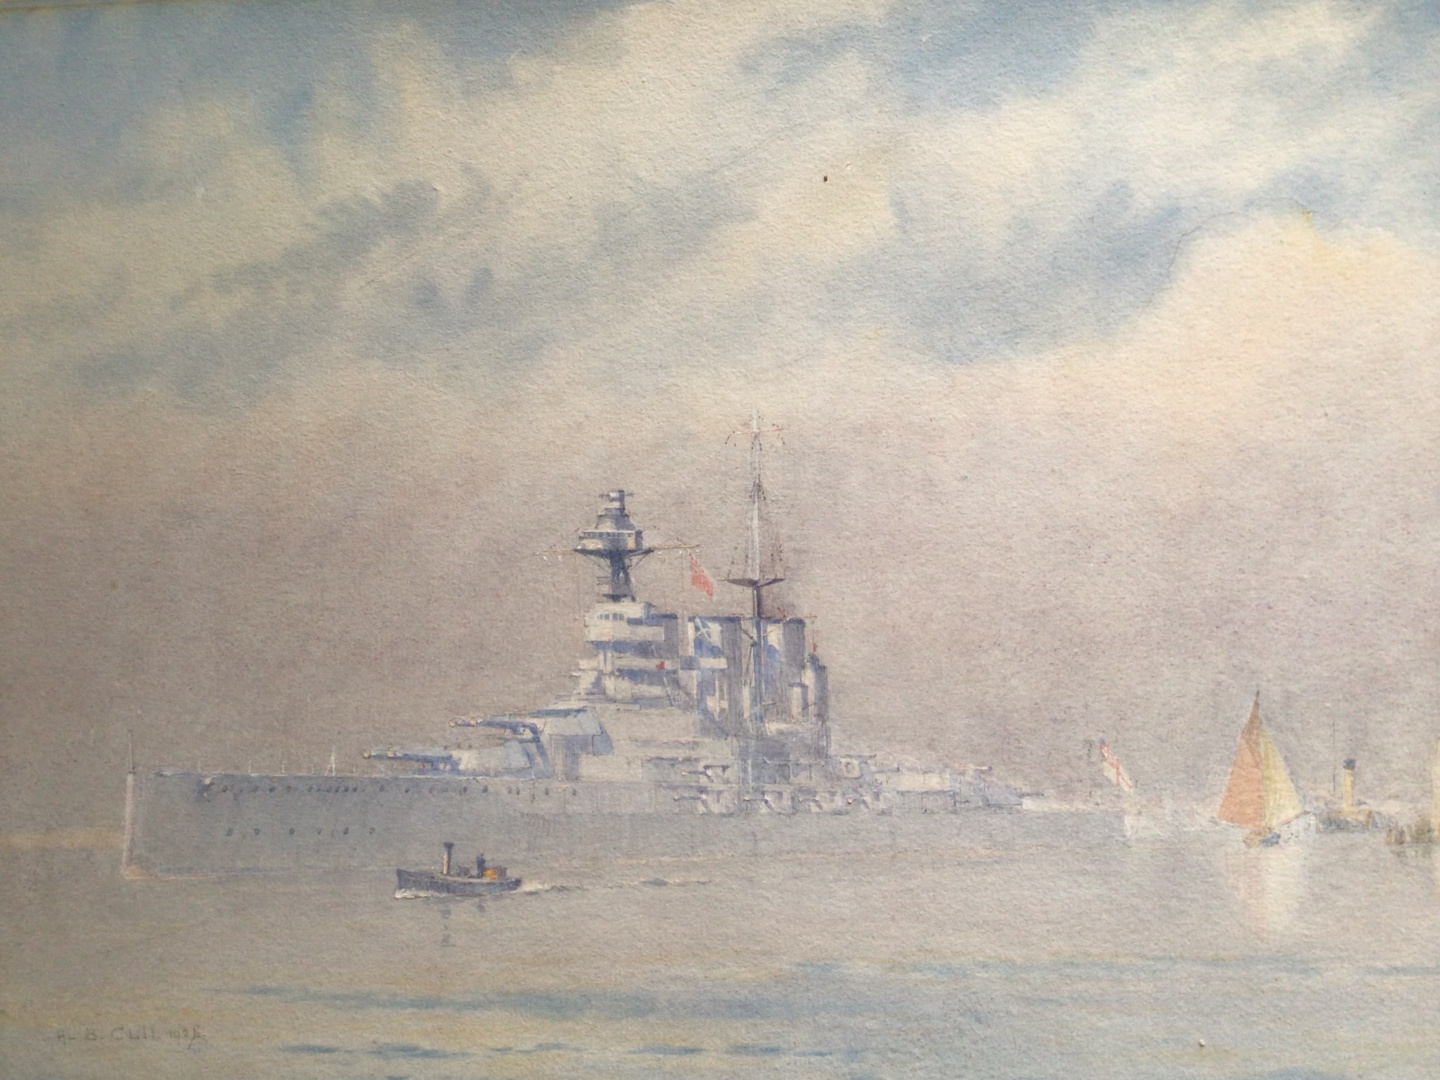 HMS TIGER leaving Portsmouth on a misty